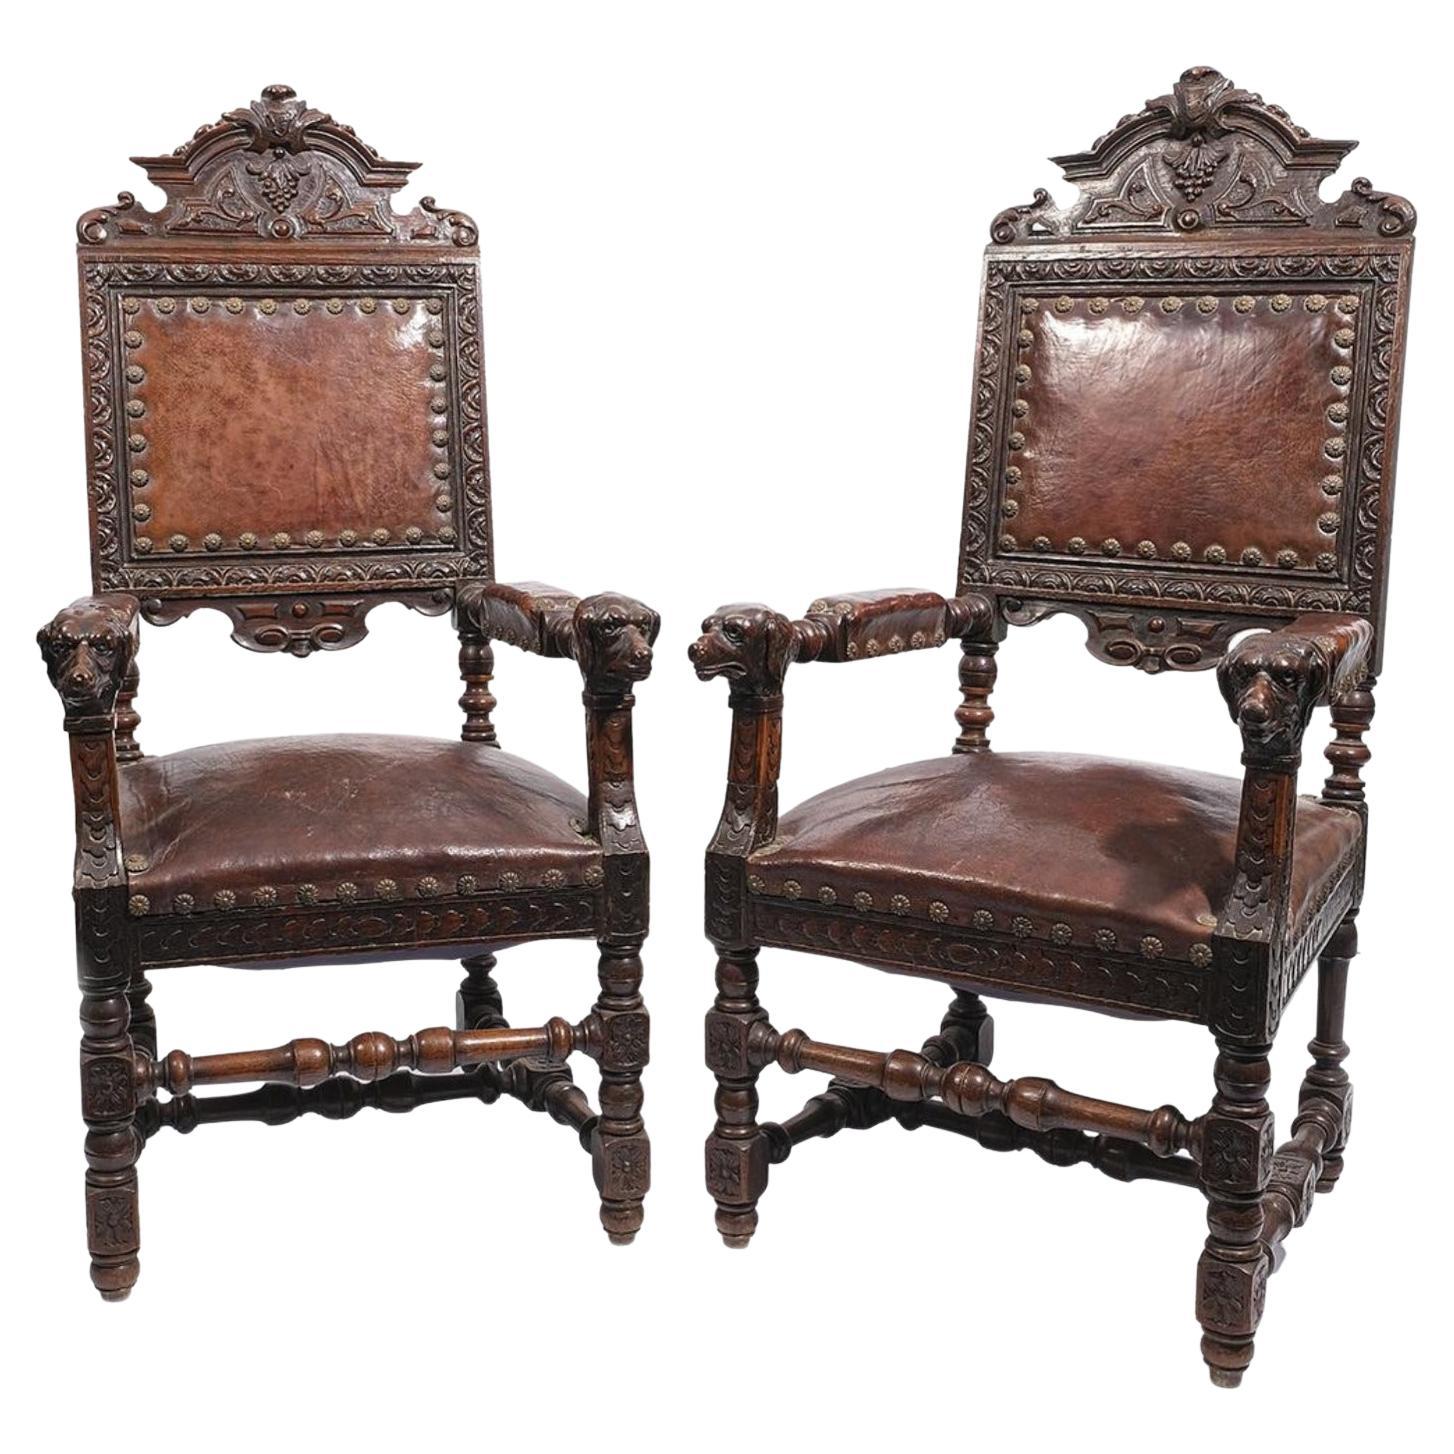 Pair of Spanish Renaissance style Armchairs 19th Century